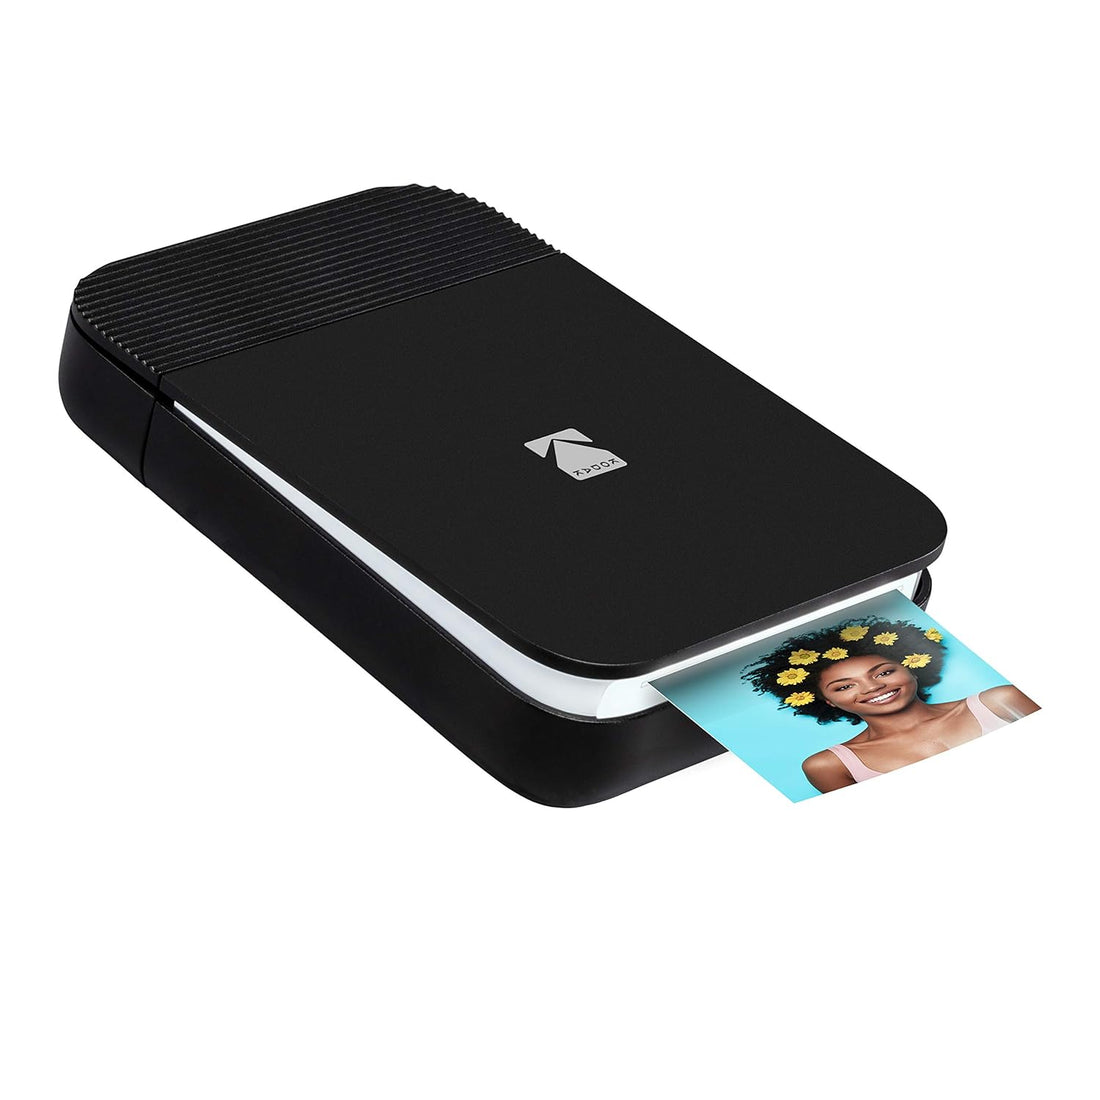 KODAK Smile Instant Digital Printer – Pop-Open Bluetooth Mini Printer for iPhone & Android – Edit, Print & Share 2x3 Zink Photos w/Free Smile App – Black/White